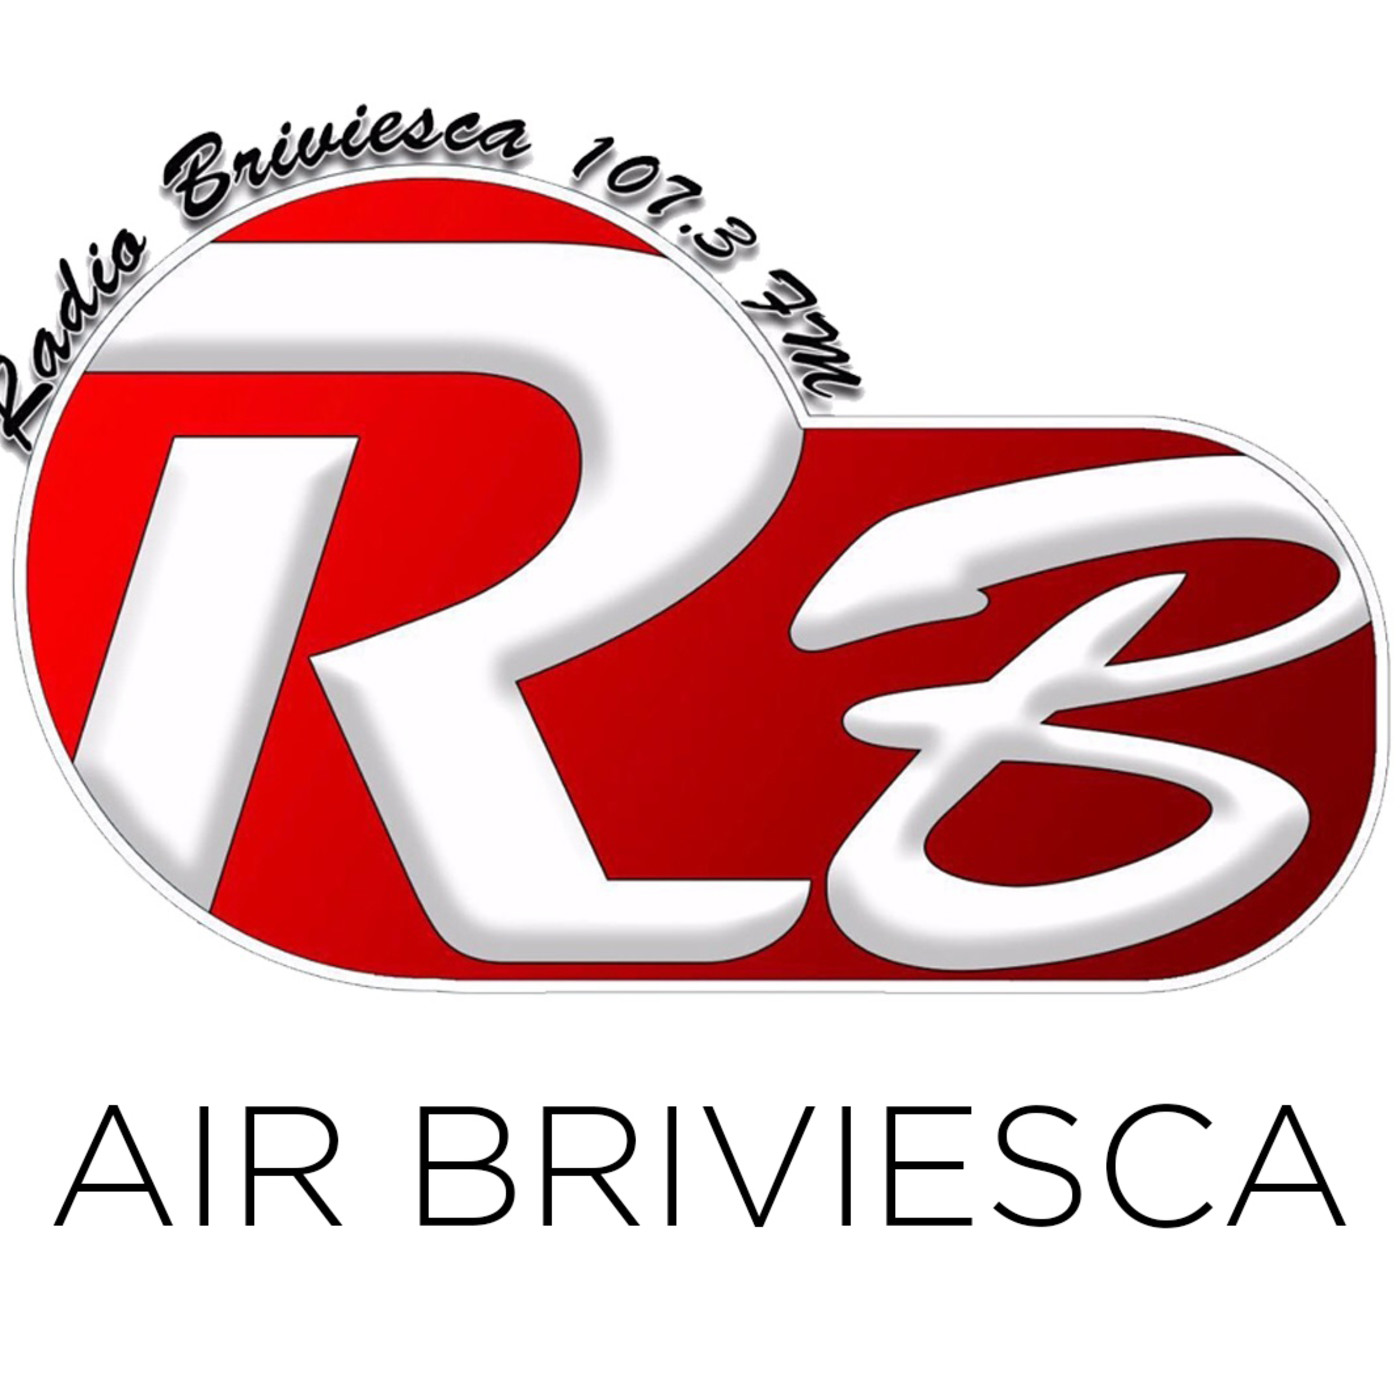 Air Briviesca 28/01/2018 Ángel Arce